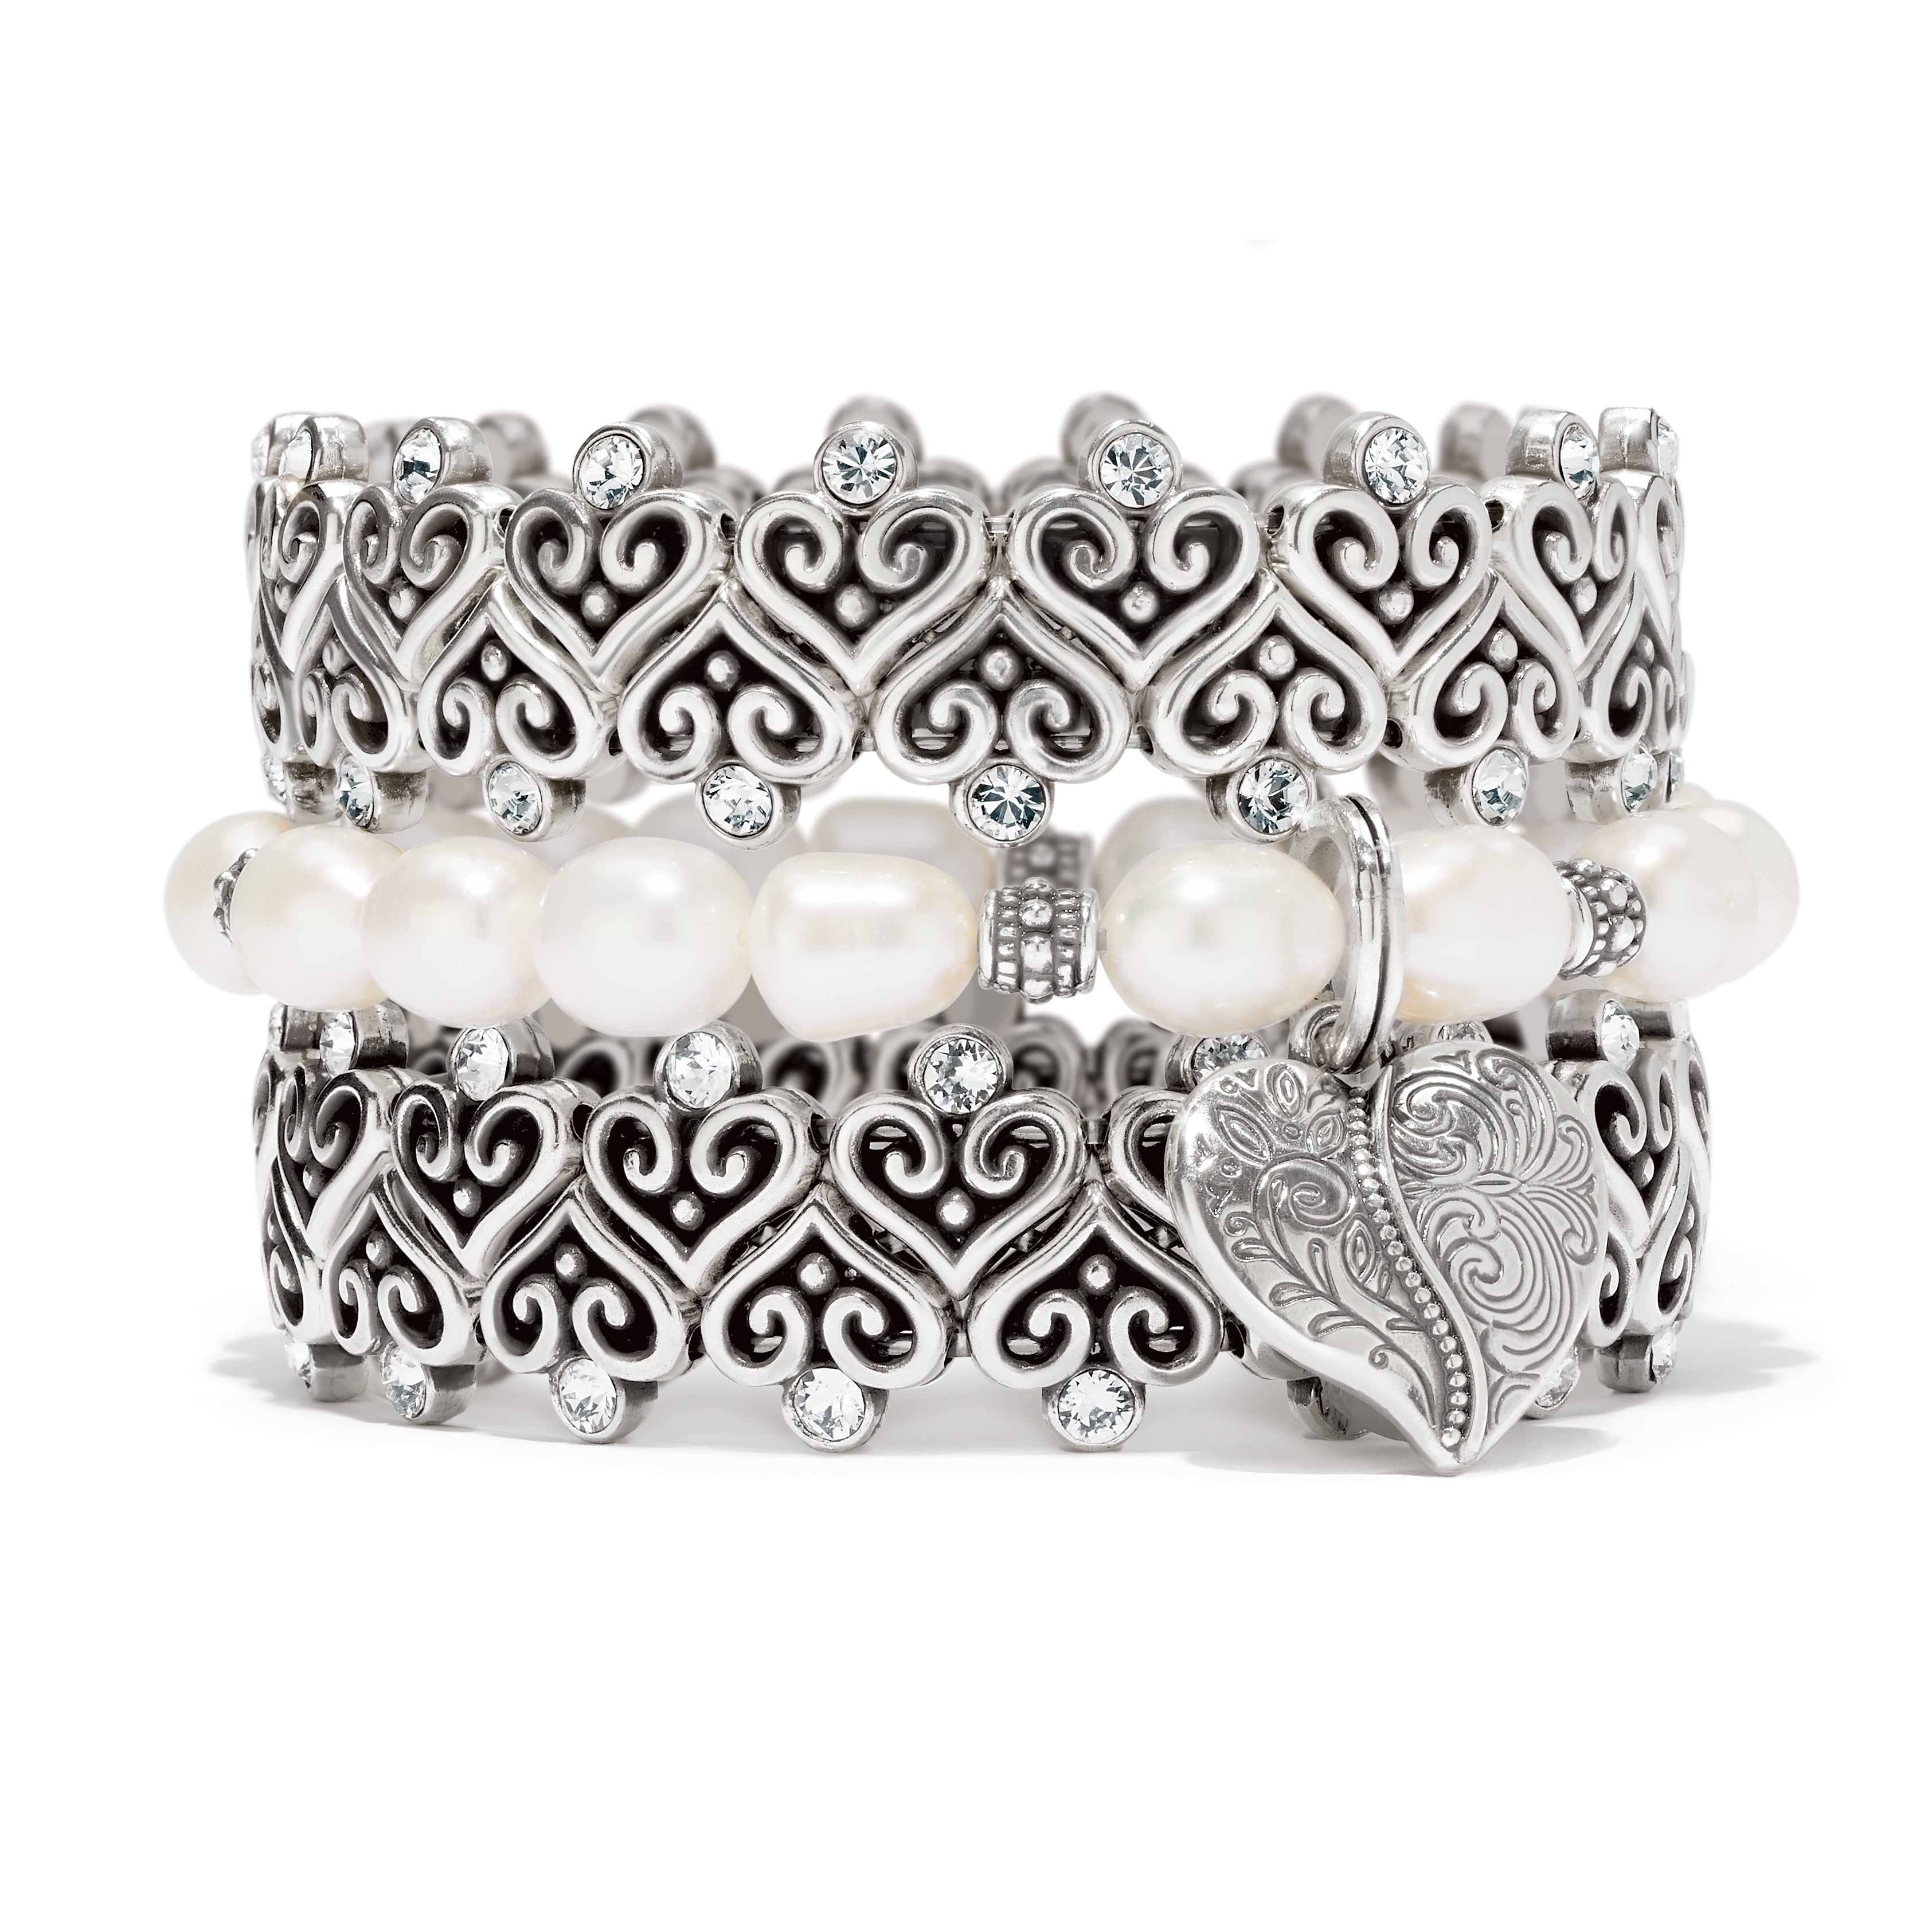 Ornate Heart Pearl Stretch Bracelet